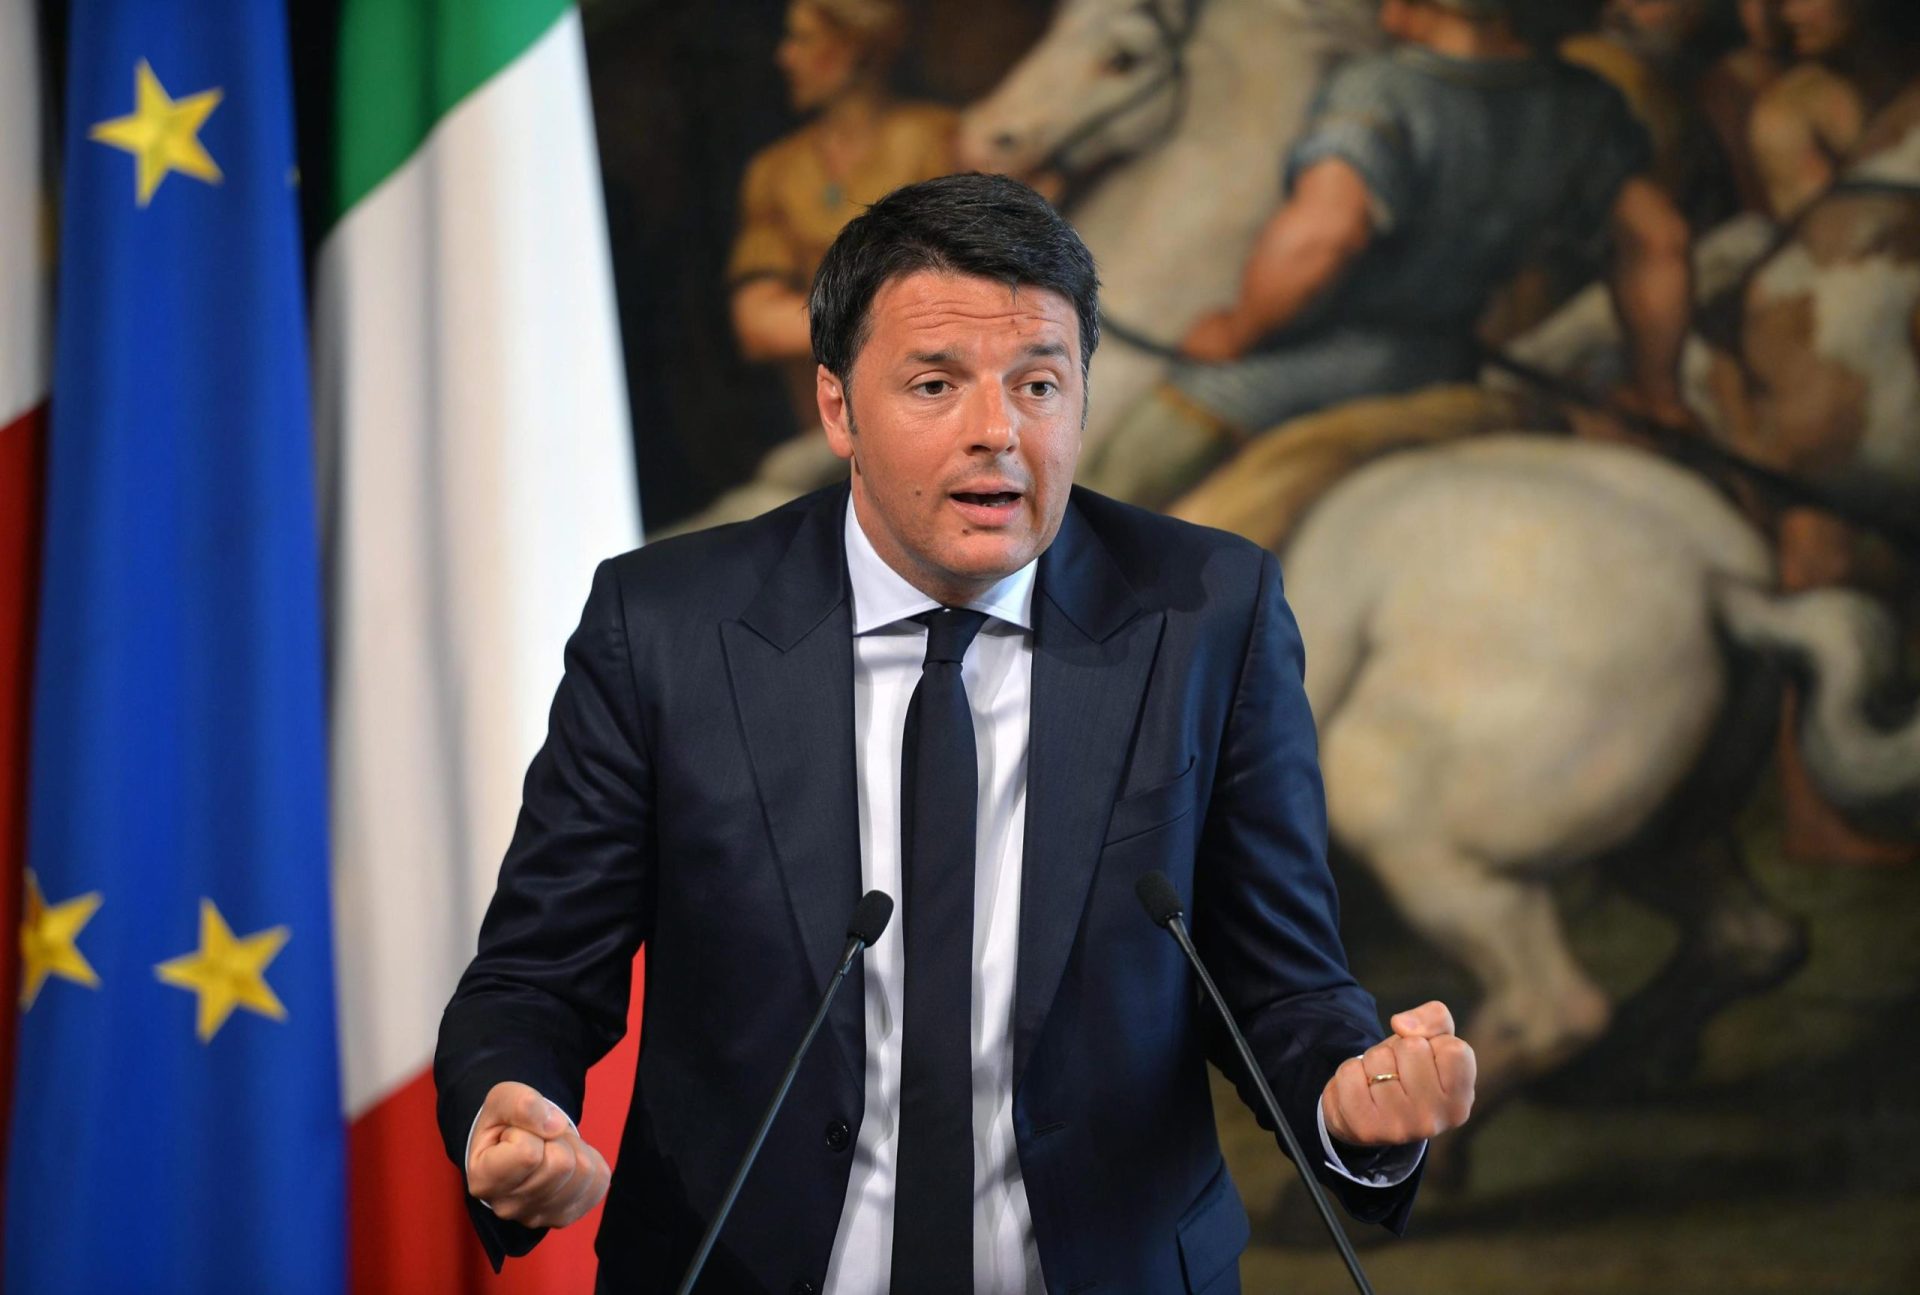 Naufrágio: Matteo Renzi admite ‘intervenções selectivas’ contra traficantes